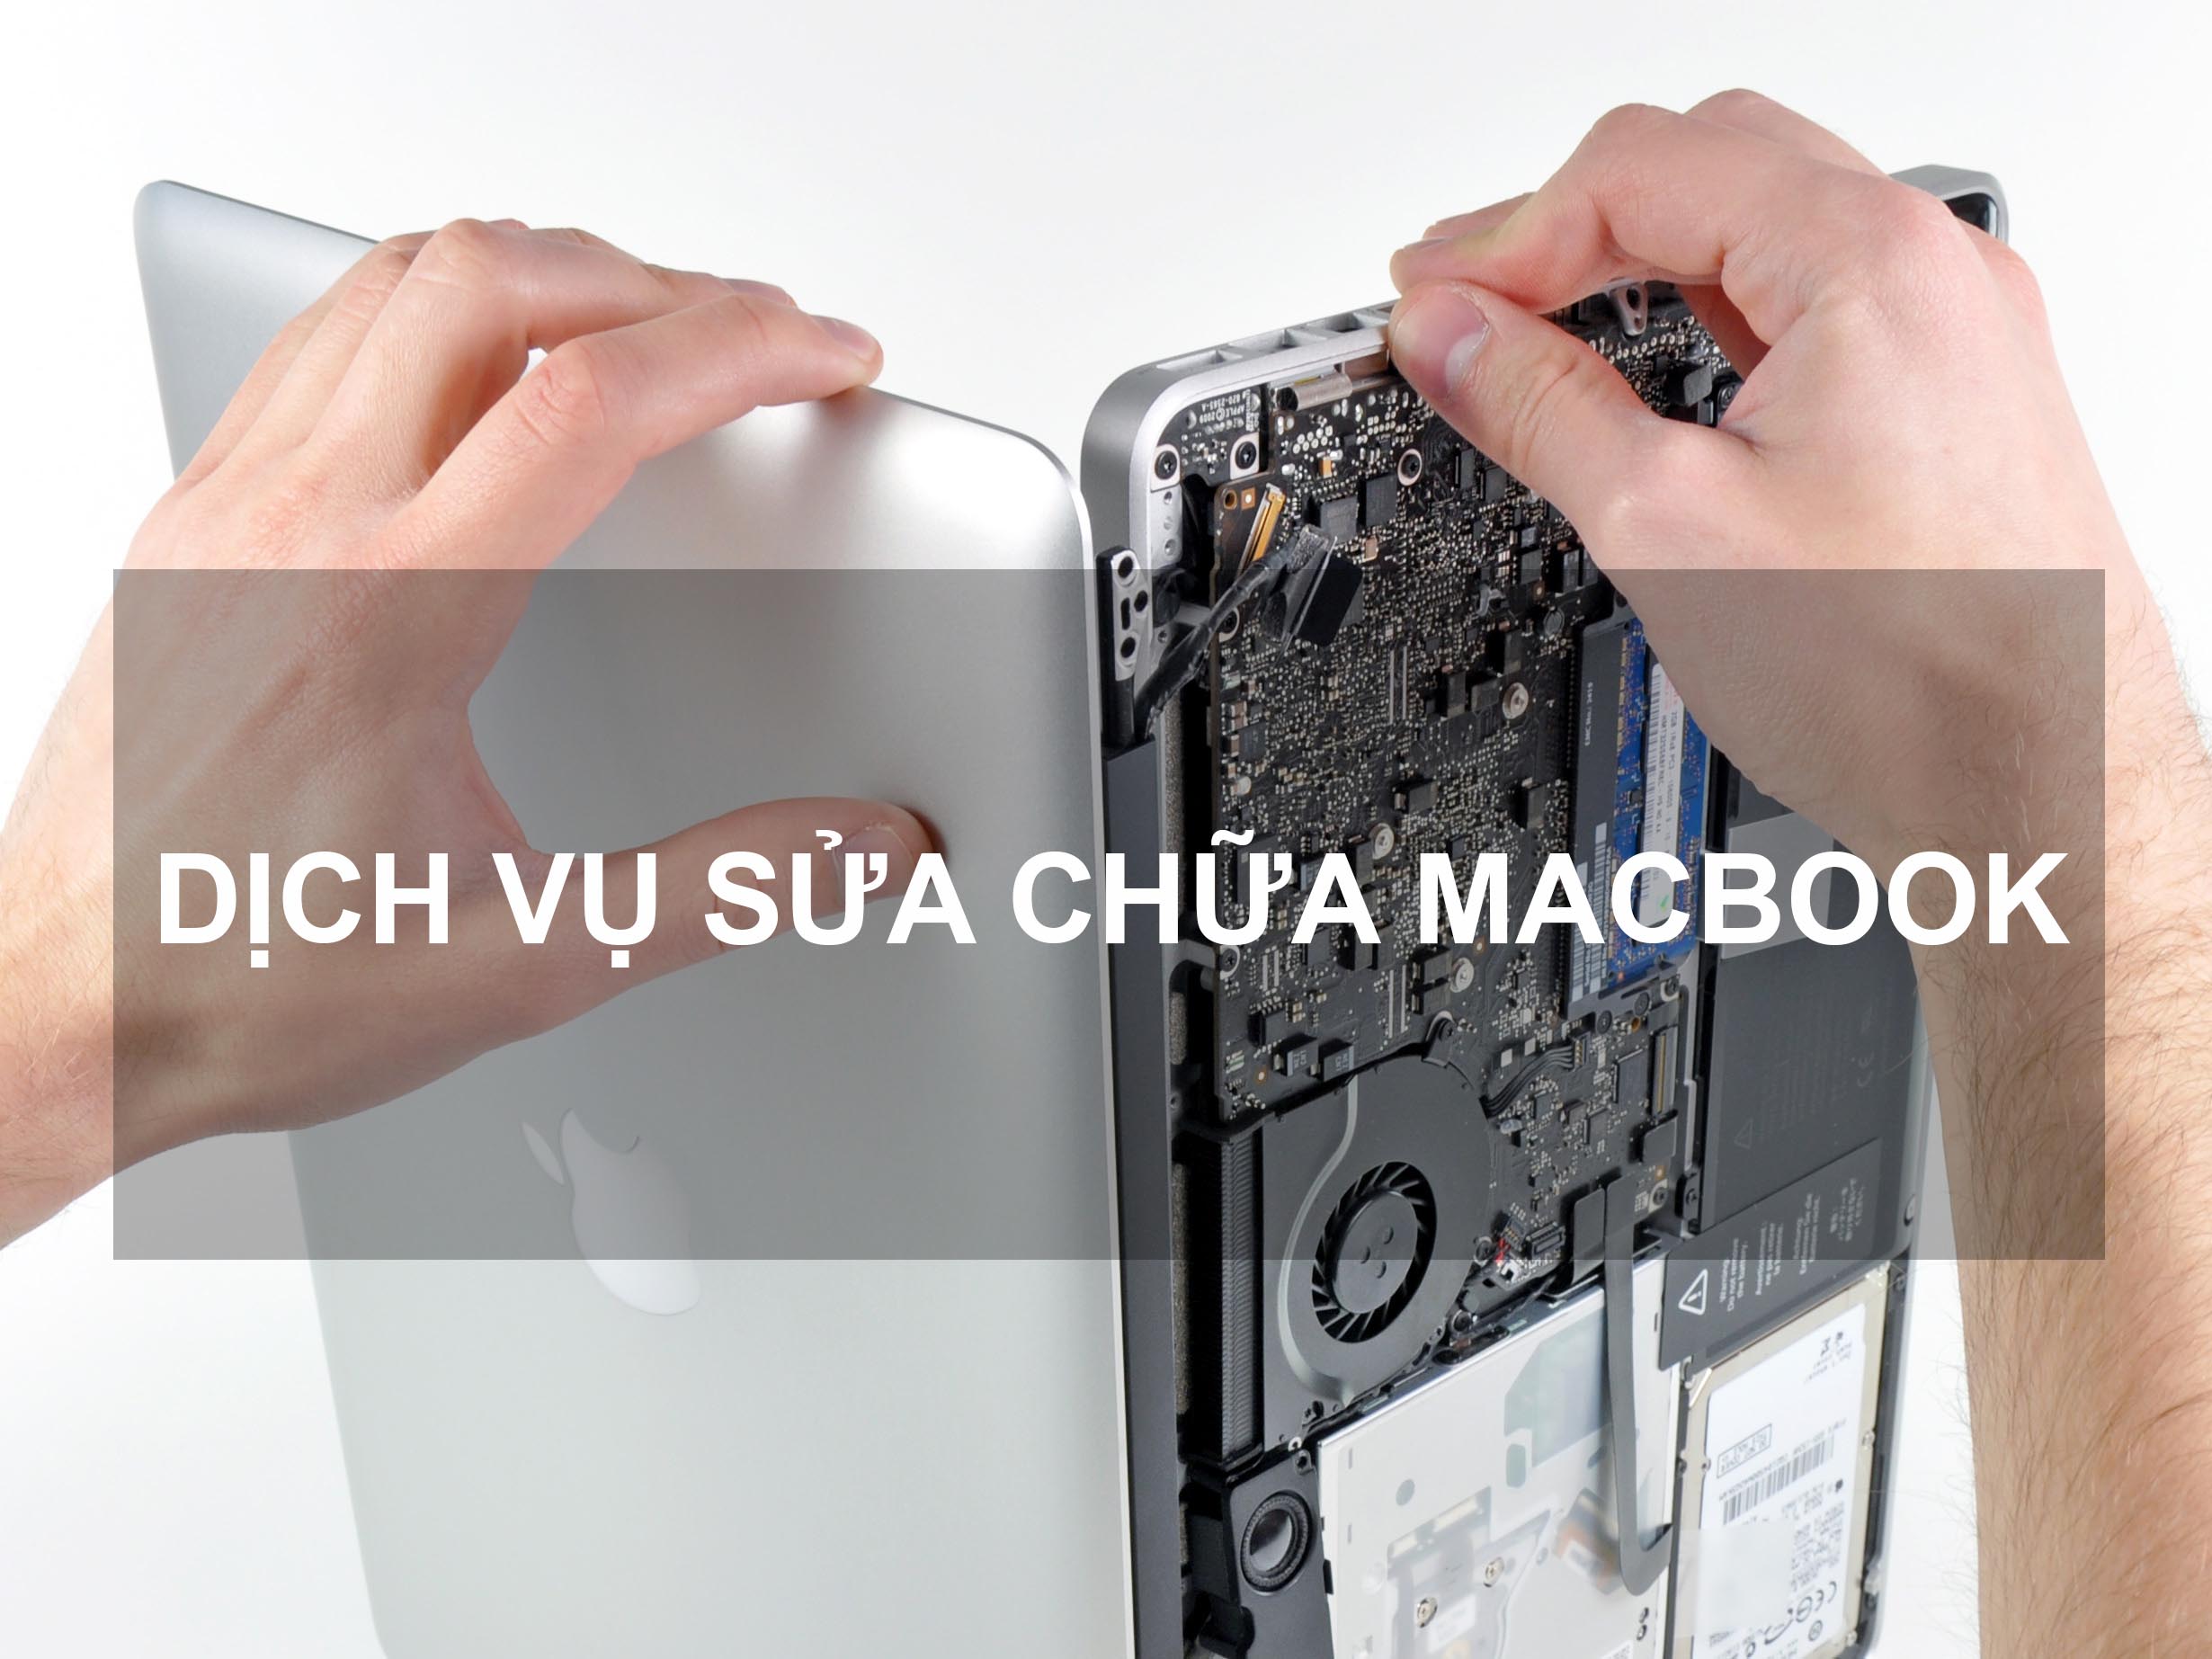 Dịch vụ sửa chữa Macbook ở TPHCM